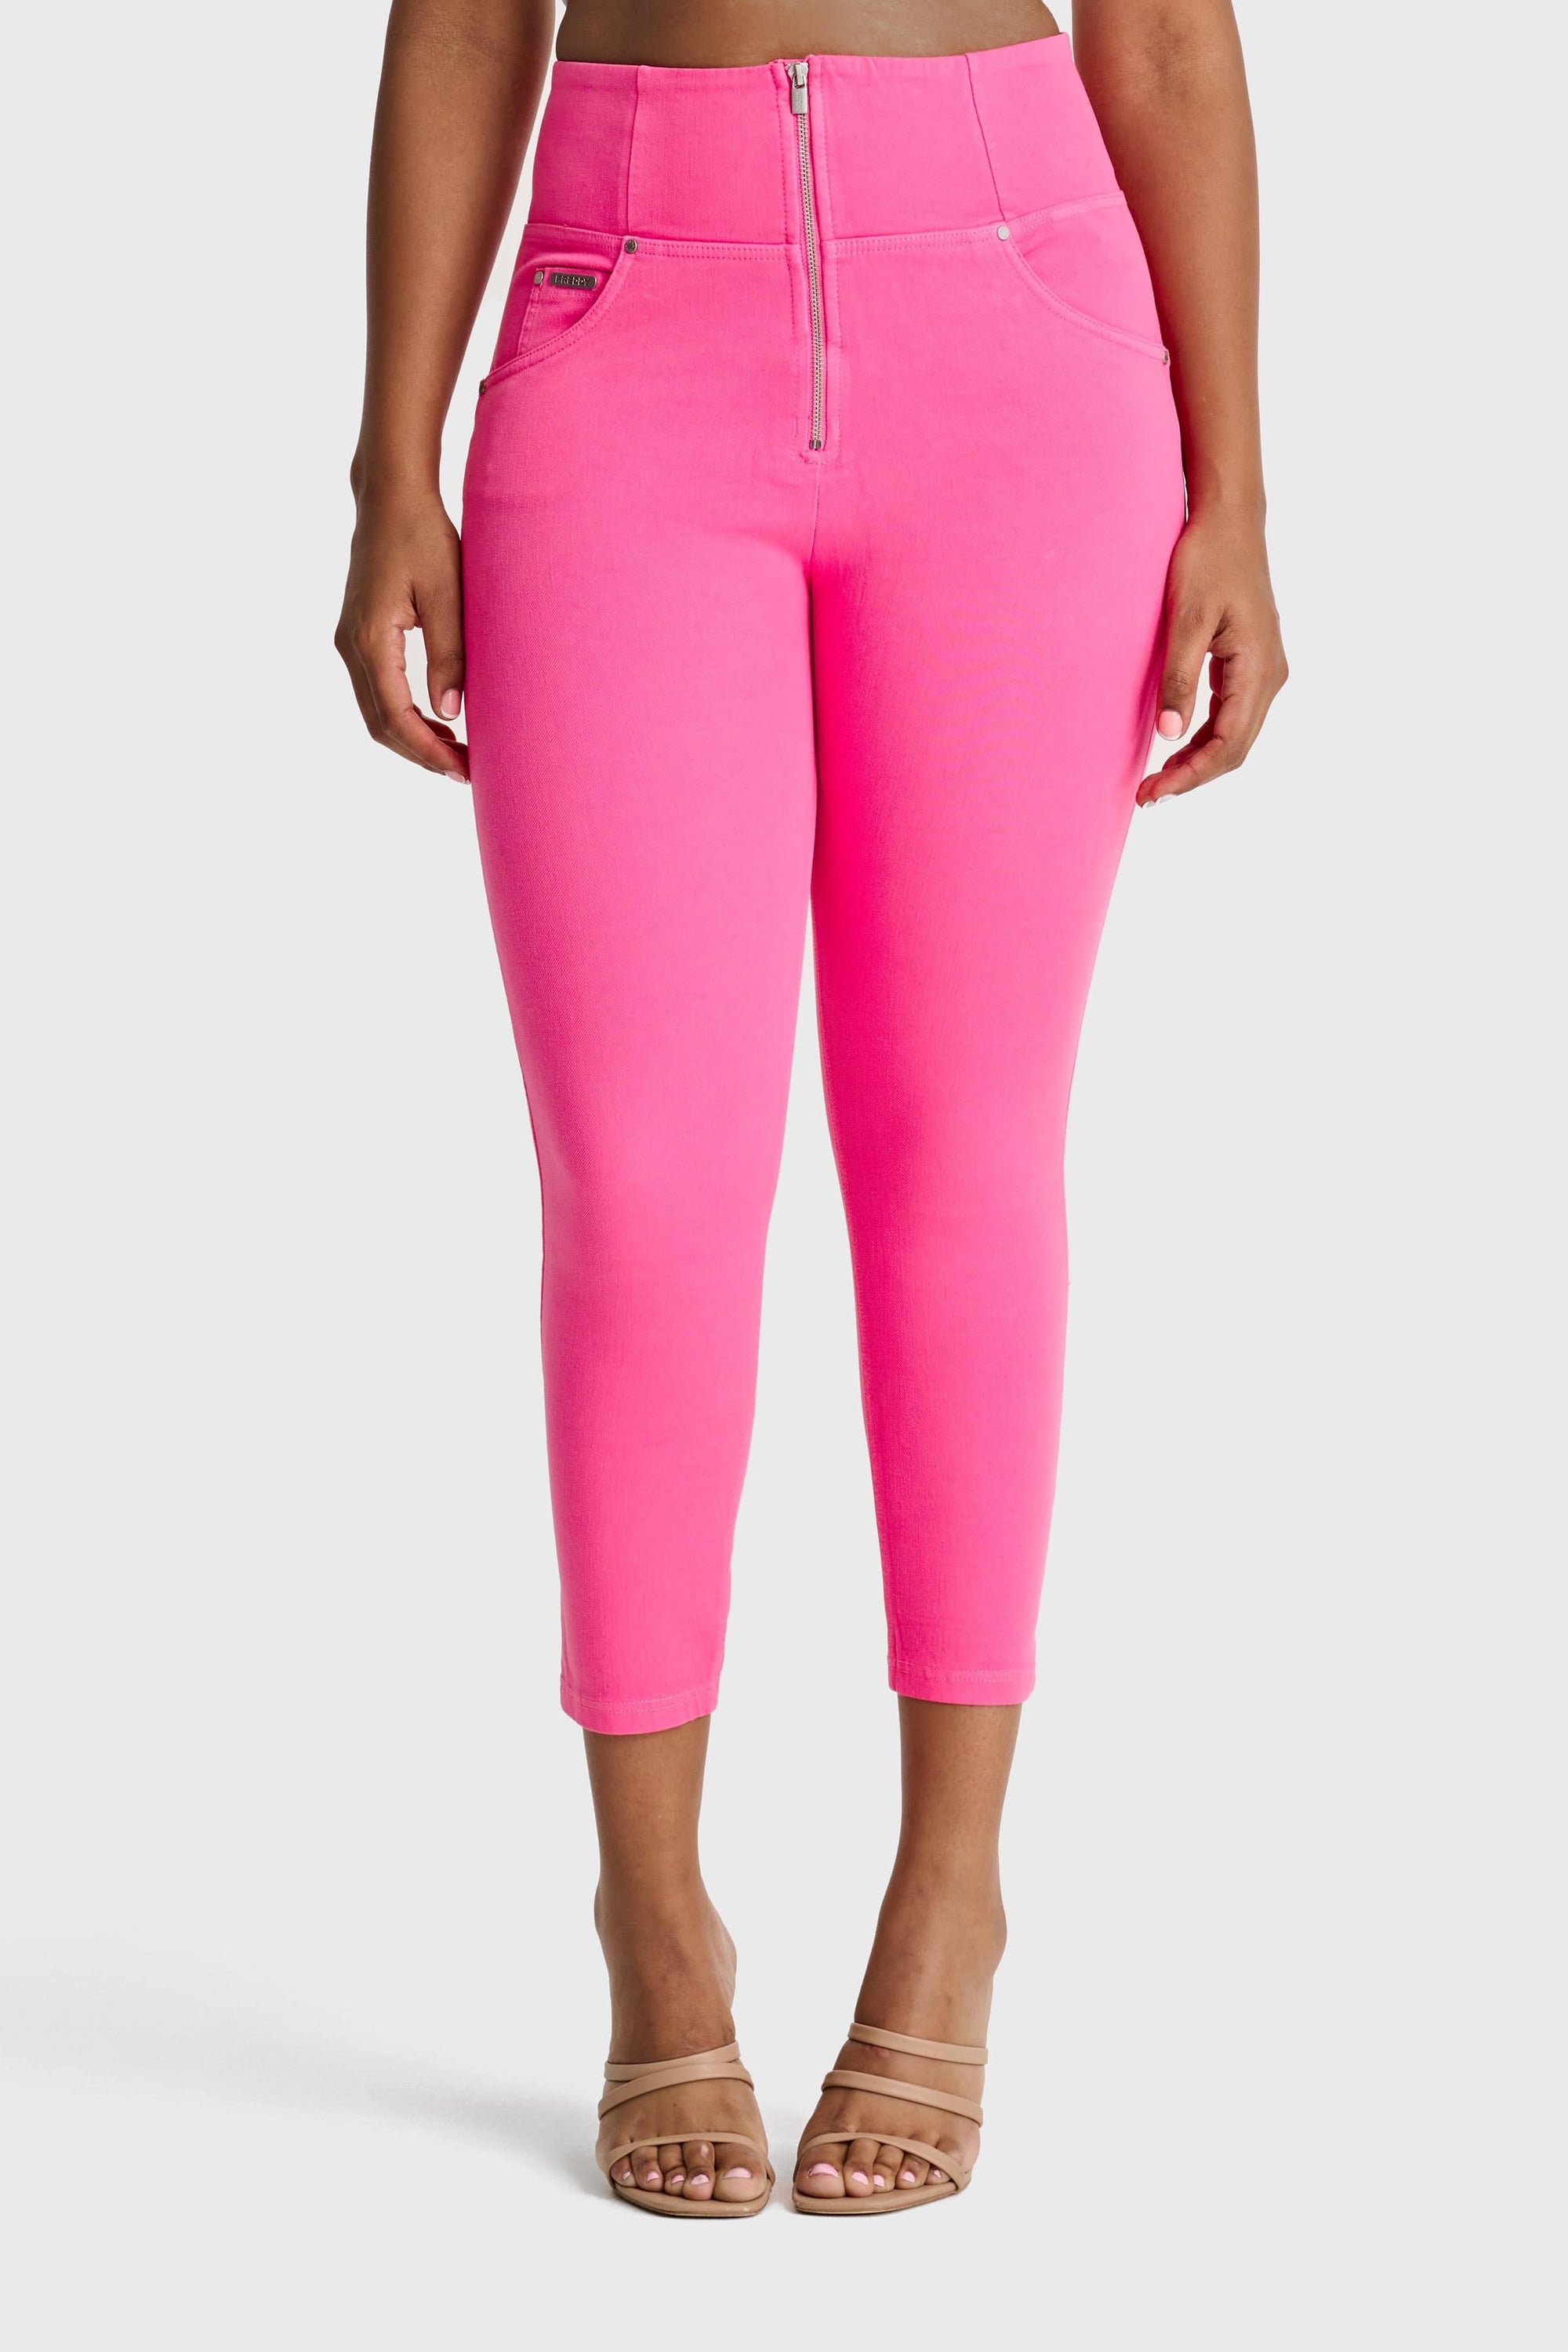 WR.UP® Snug Curvy Jeans - High Waisted - Petite Length - Candy Pink 4